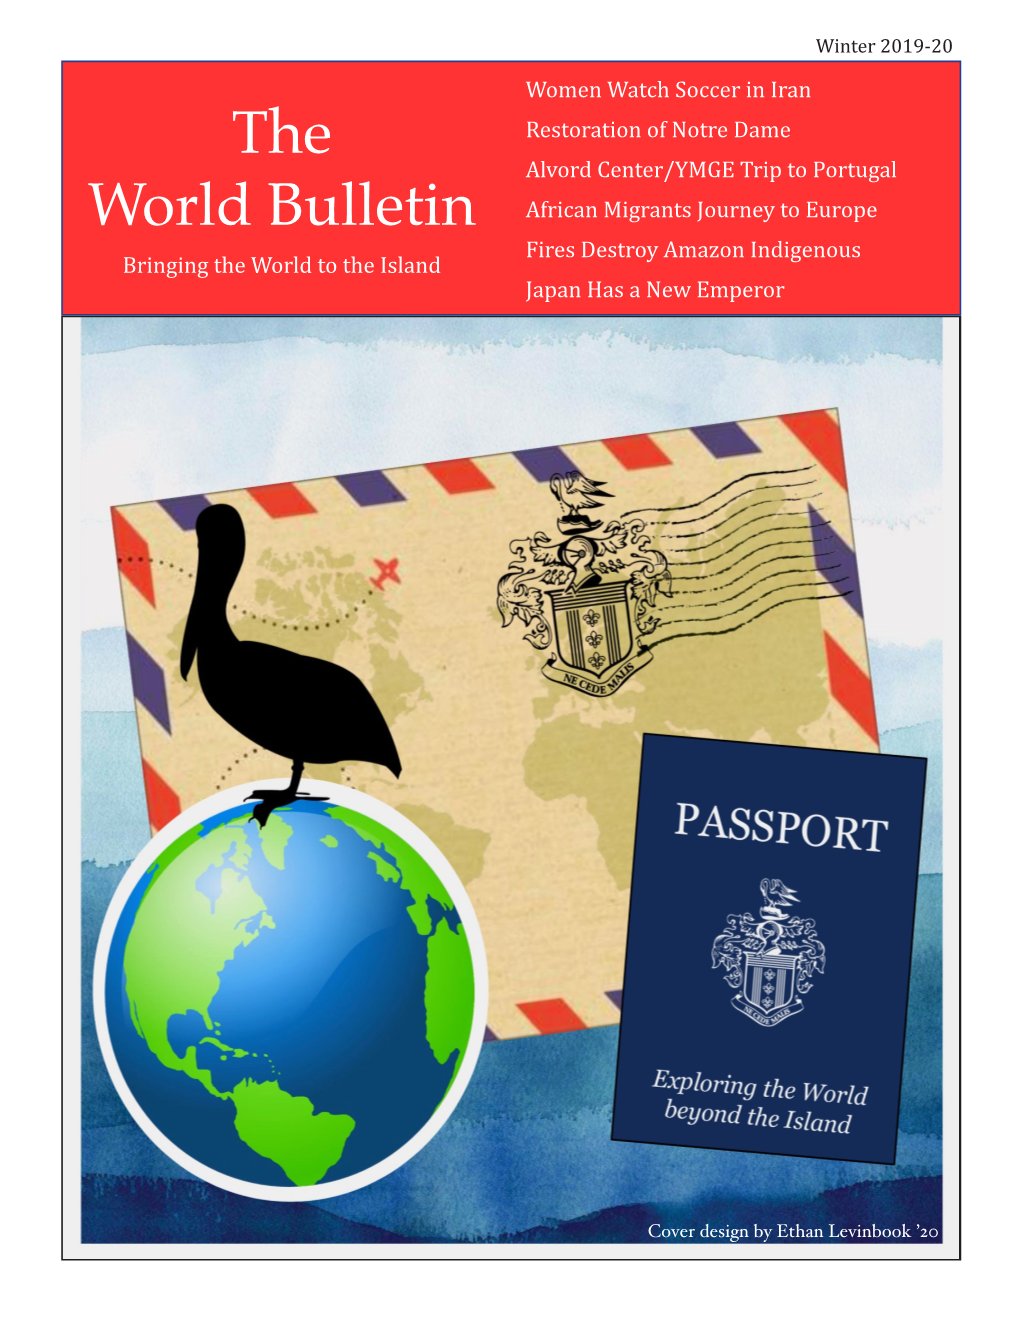 The World Bulletin